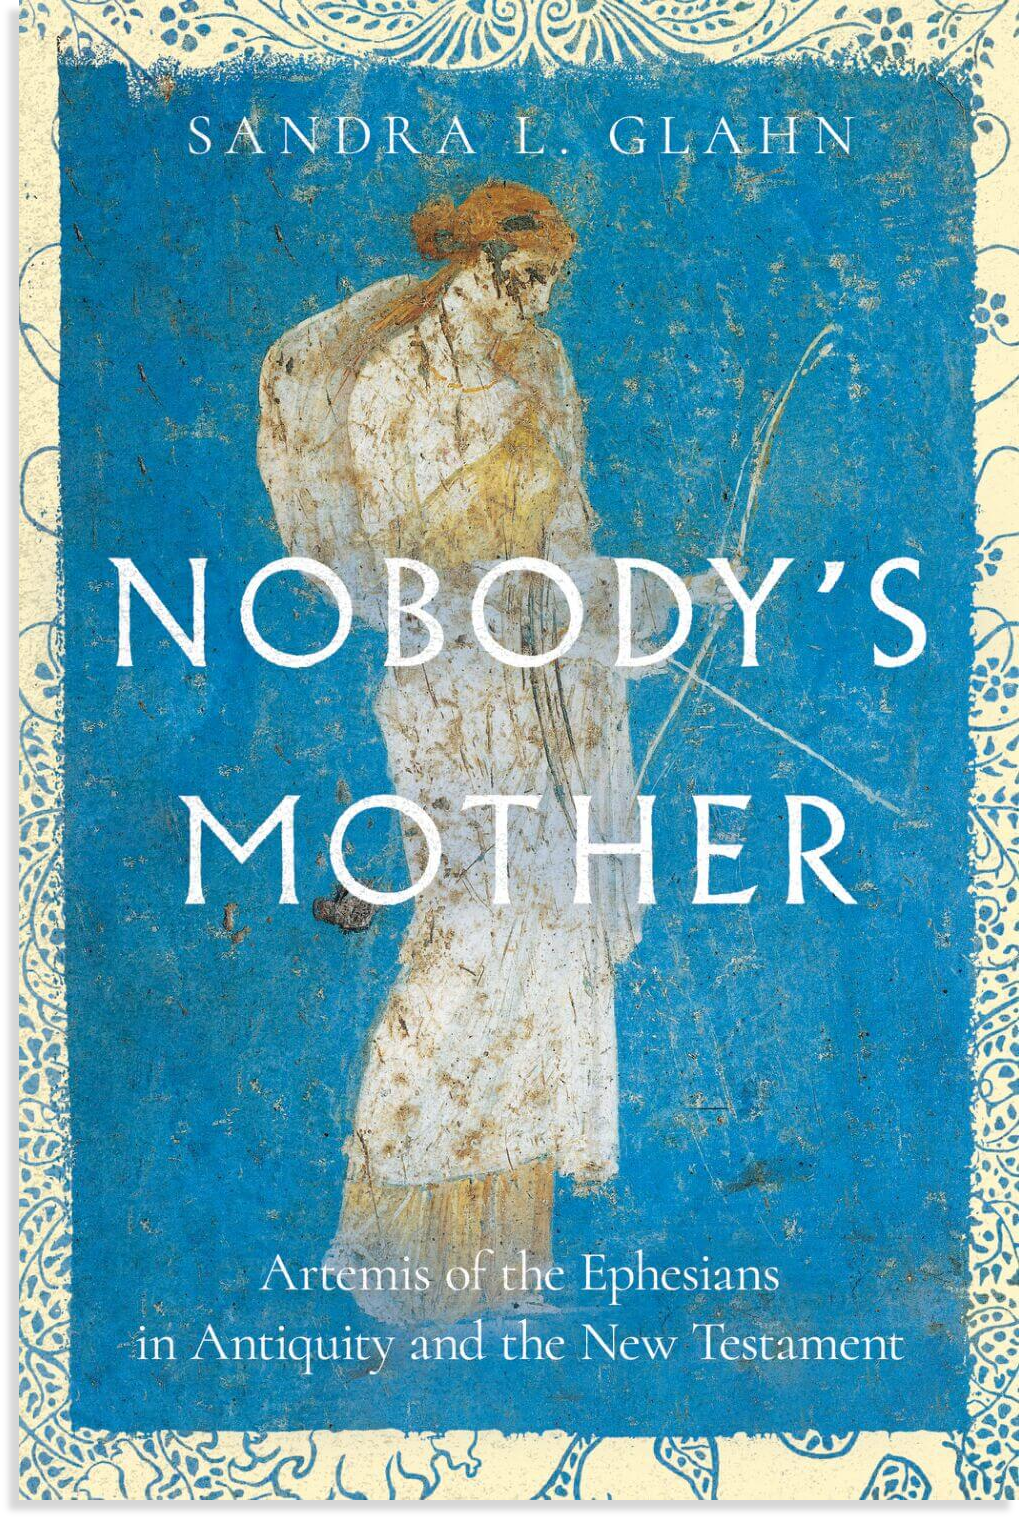 Sandra-L-Glahn-Nobodys-Mother-Artemis-Ephesians-Book.png